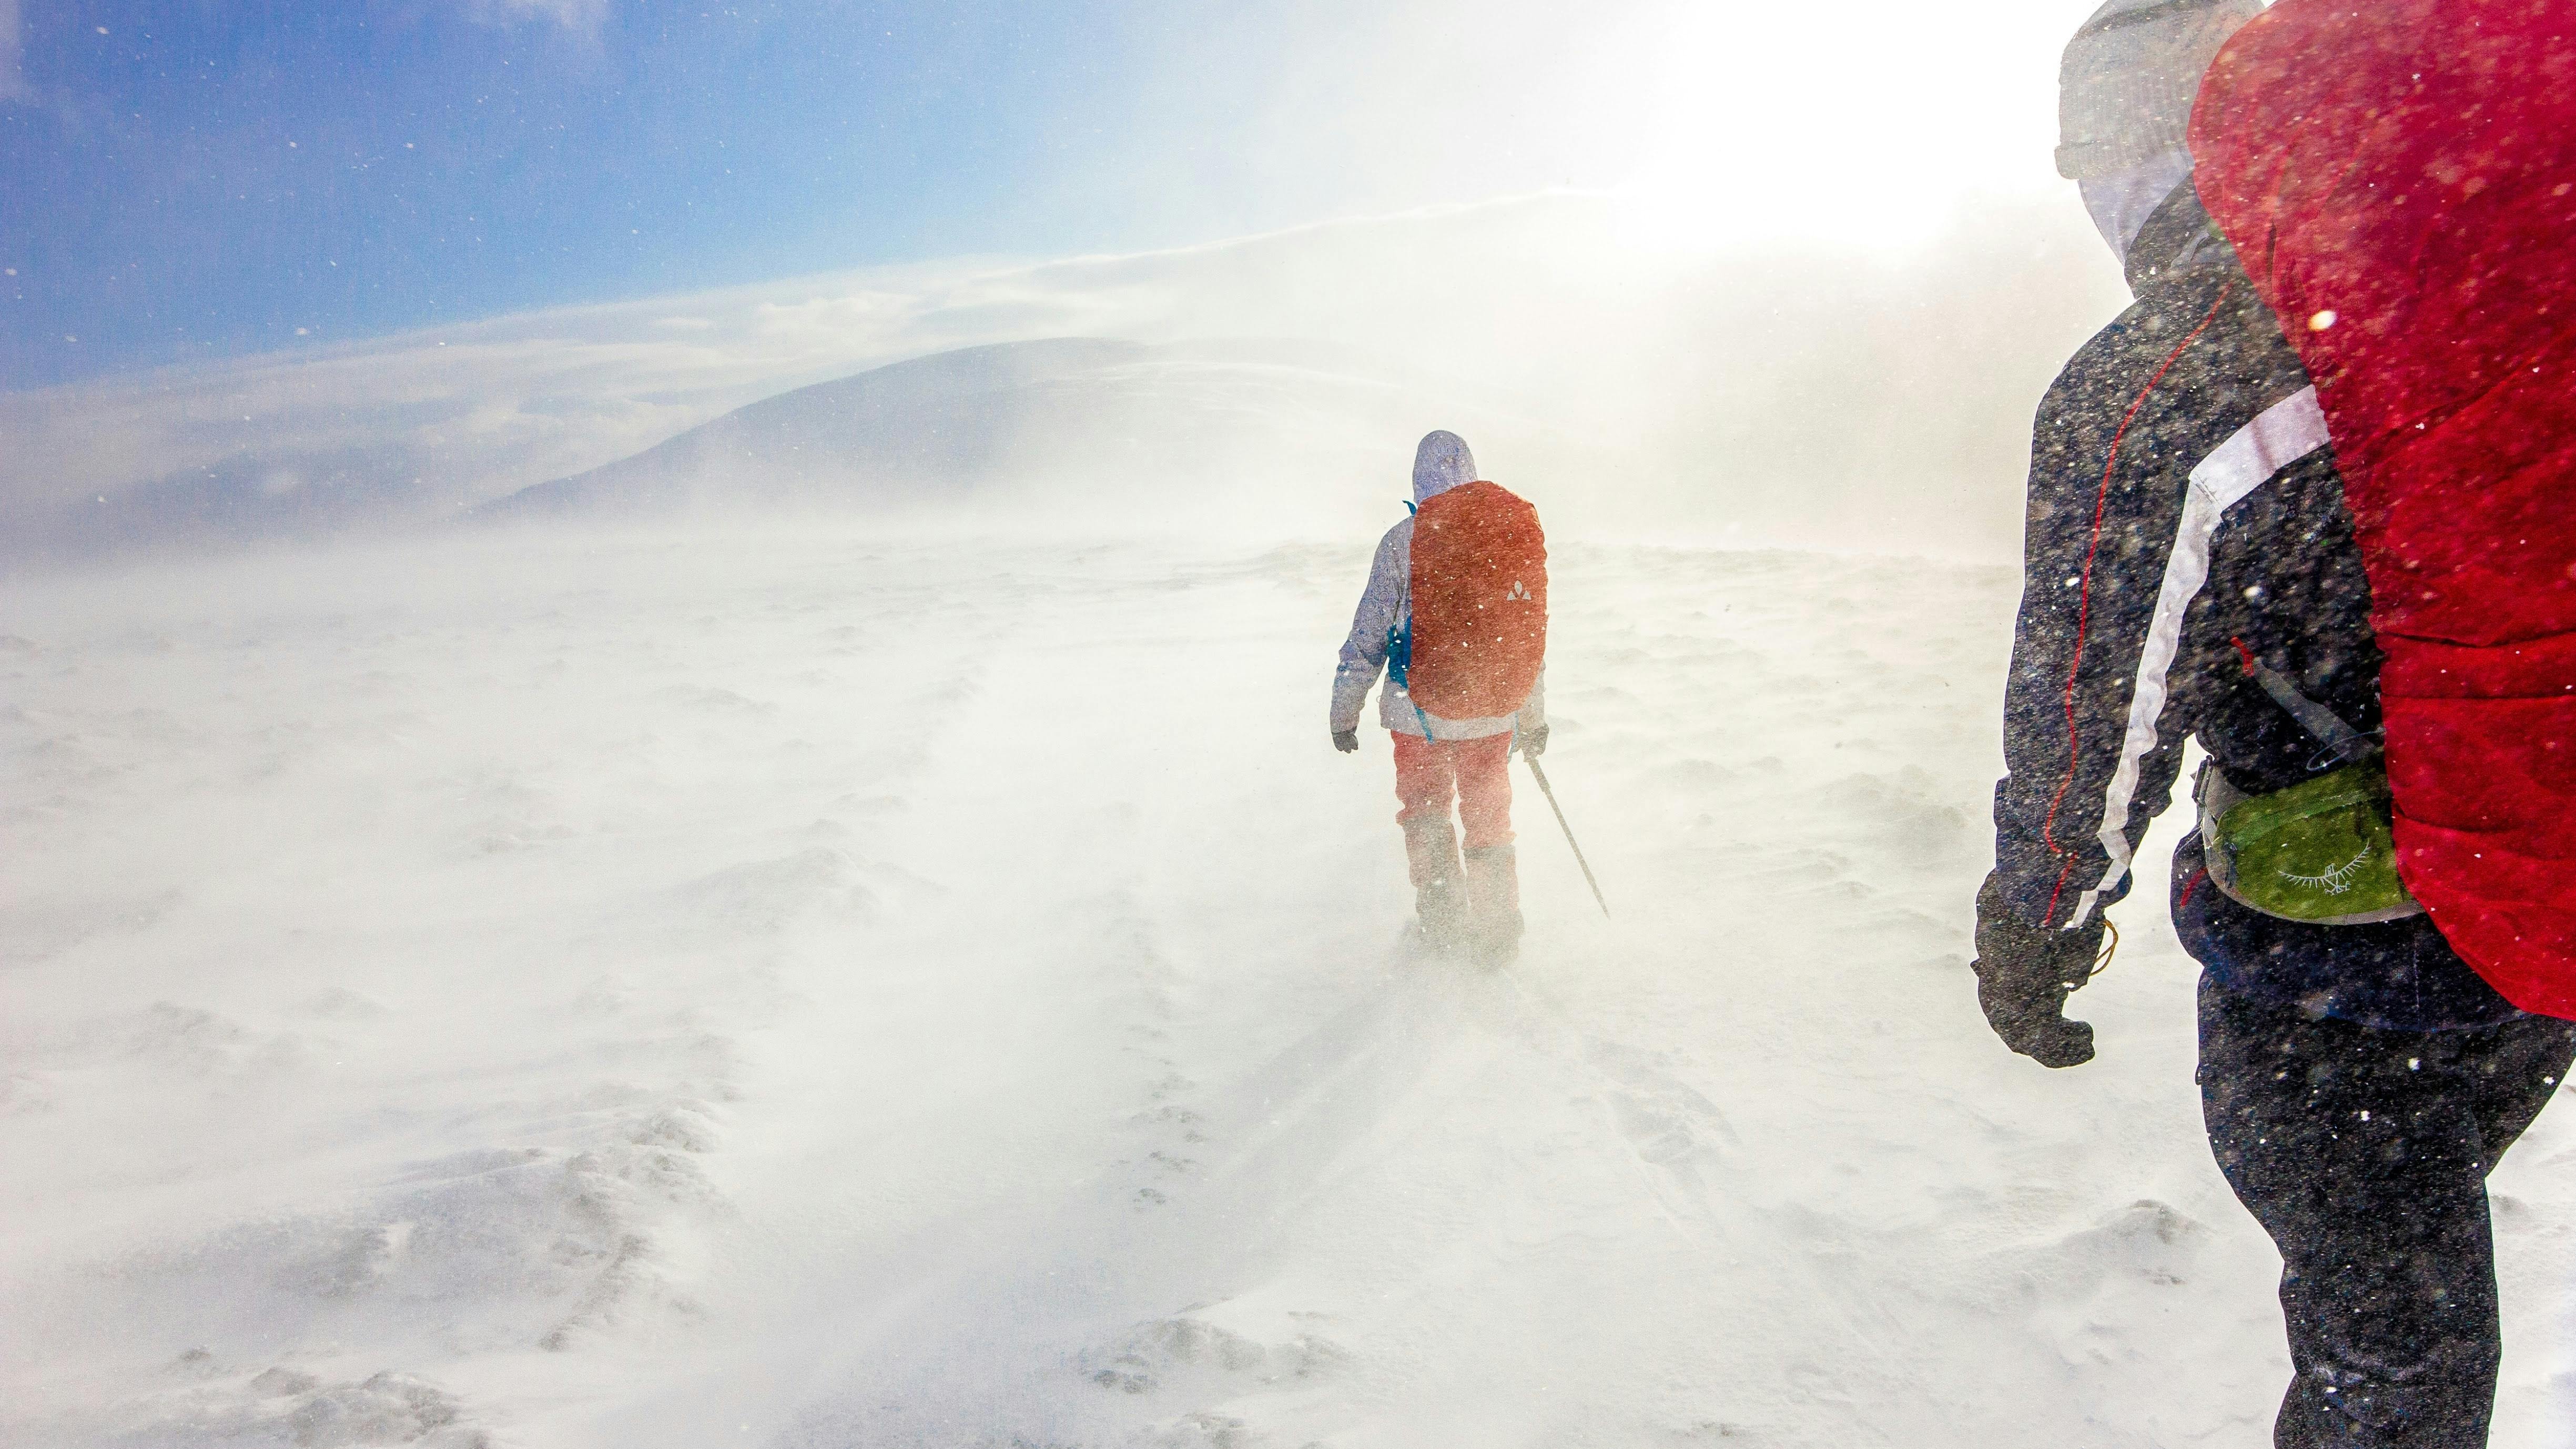 Two people hike across a snowy plain